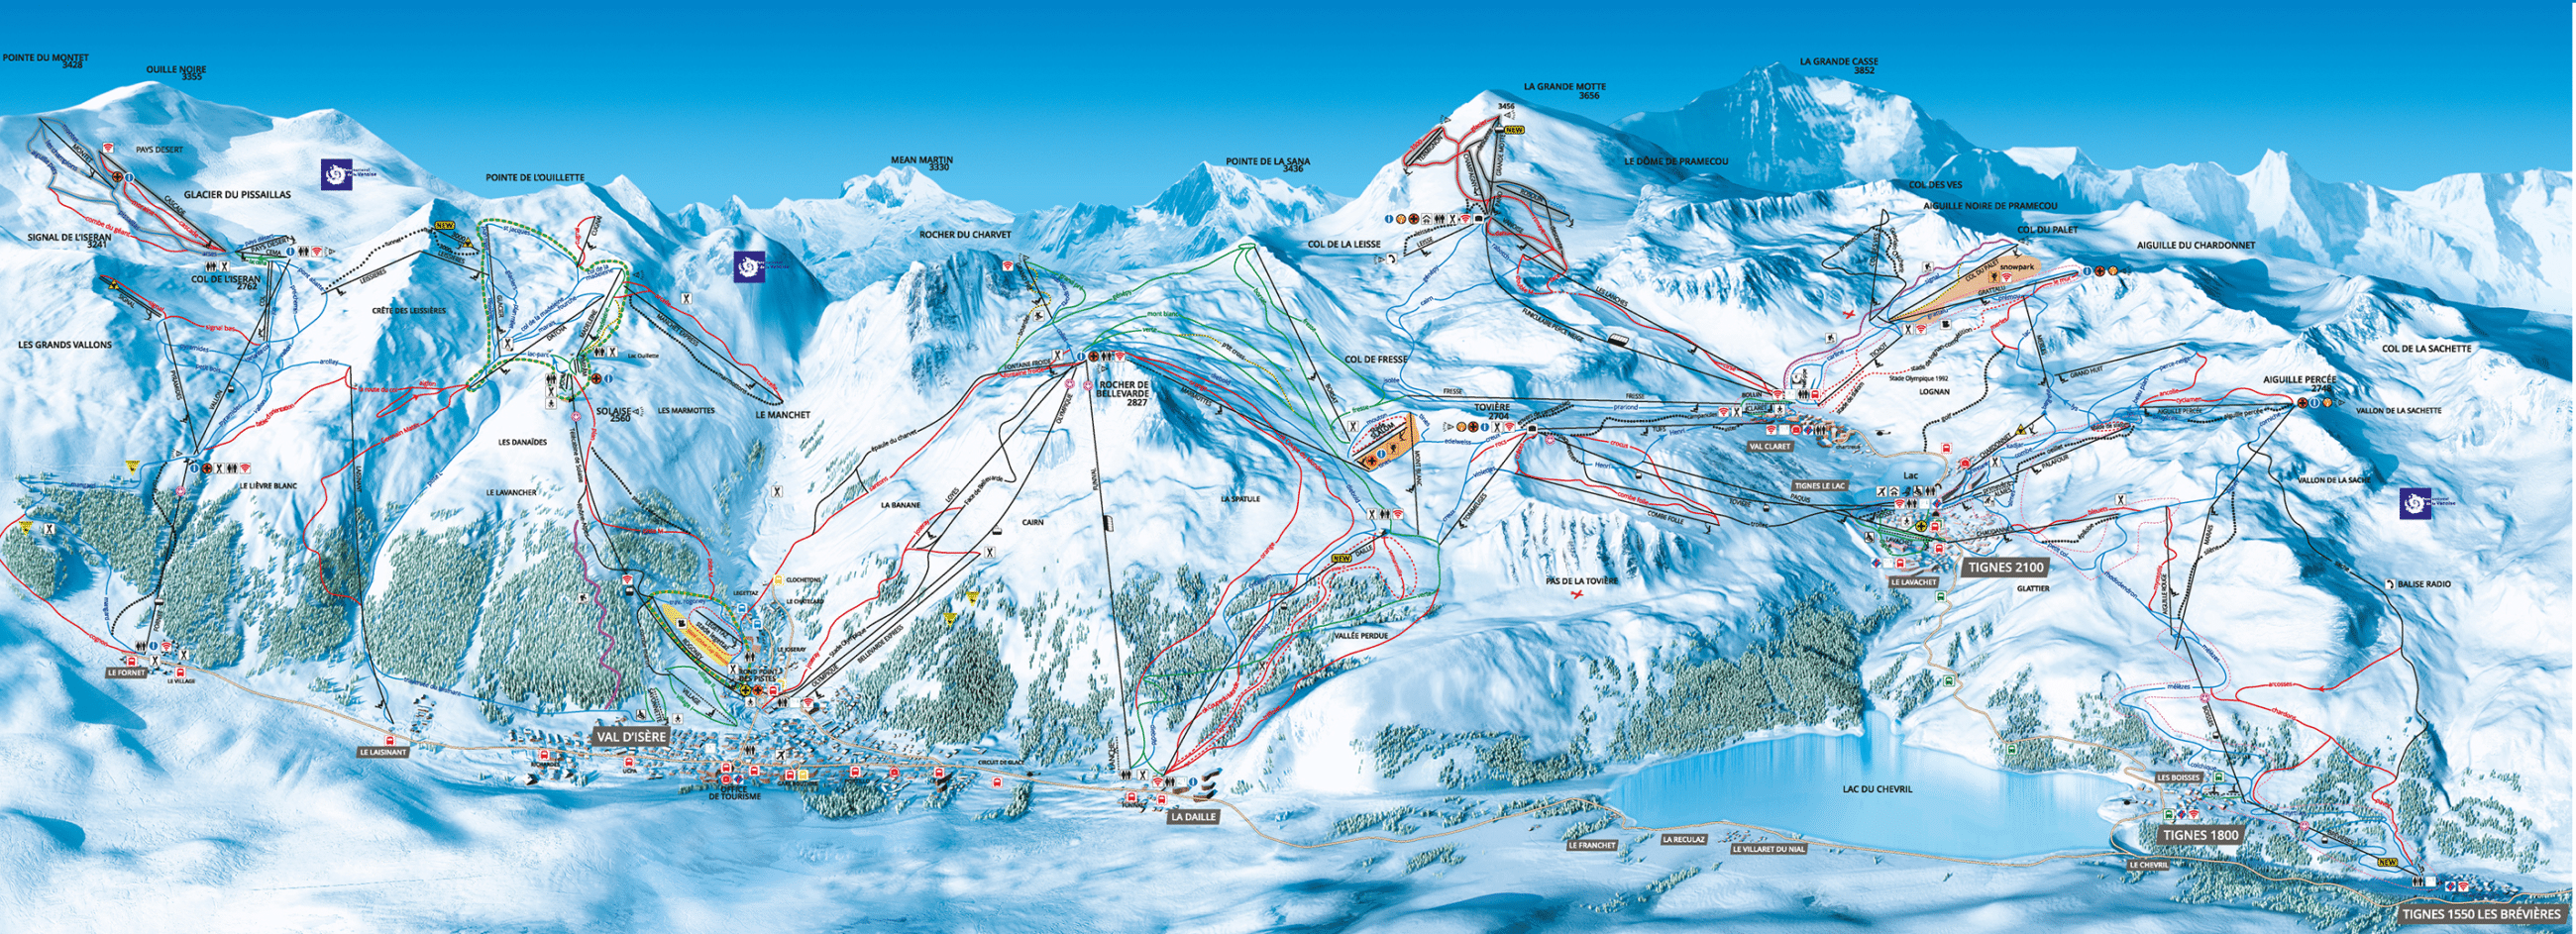 Tignes Val d'isère - Plan des pistes de ski